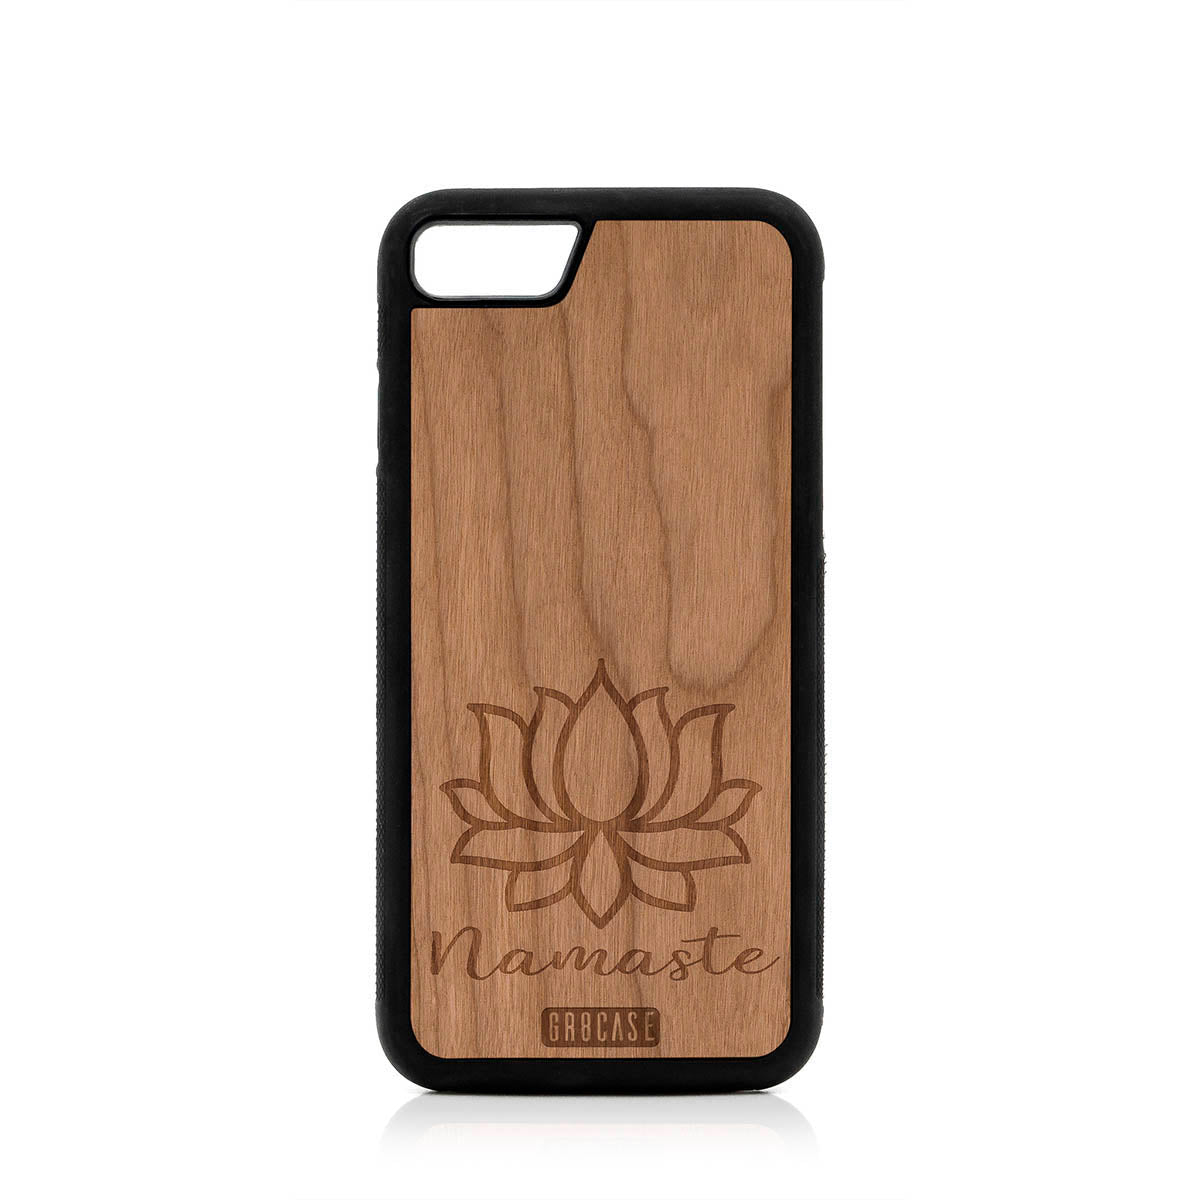 Namaste (Lotus Flower) Design Wood Case For iPhone 7/8